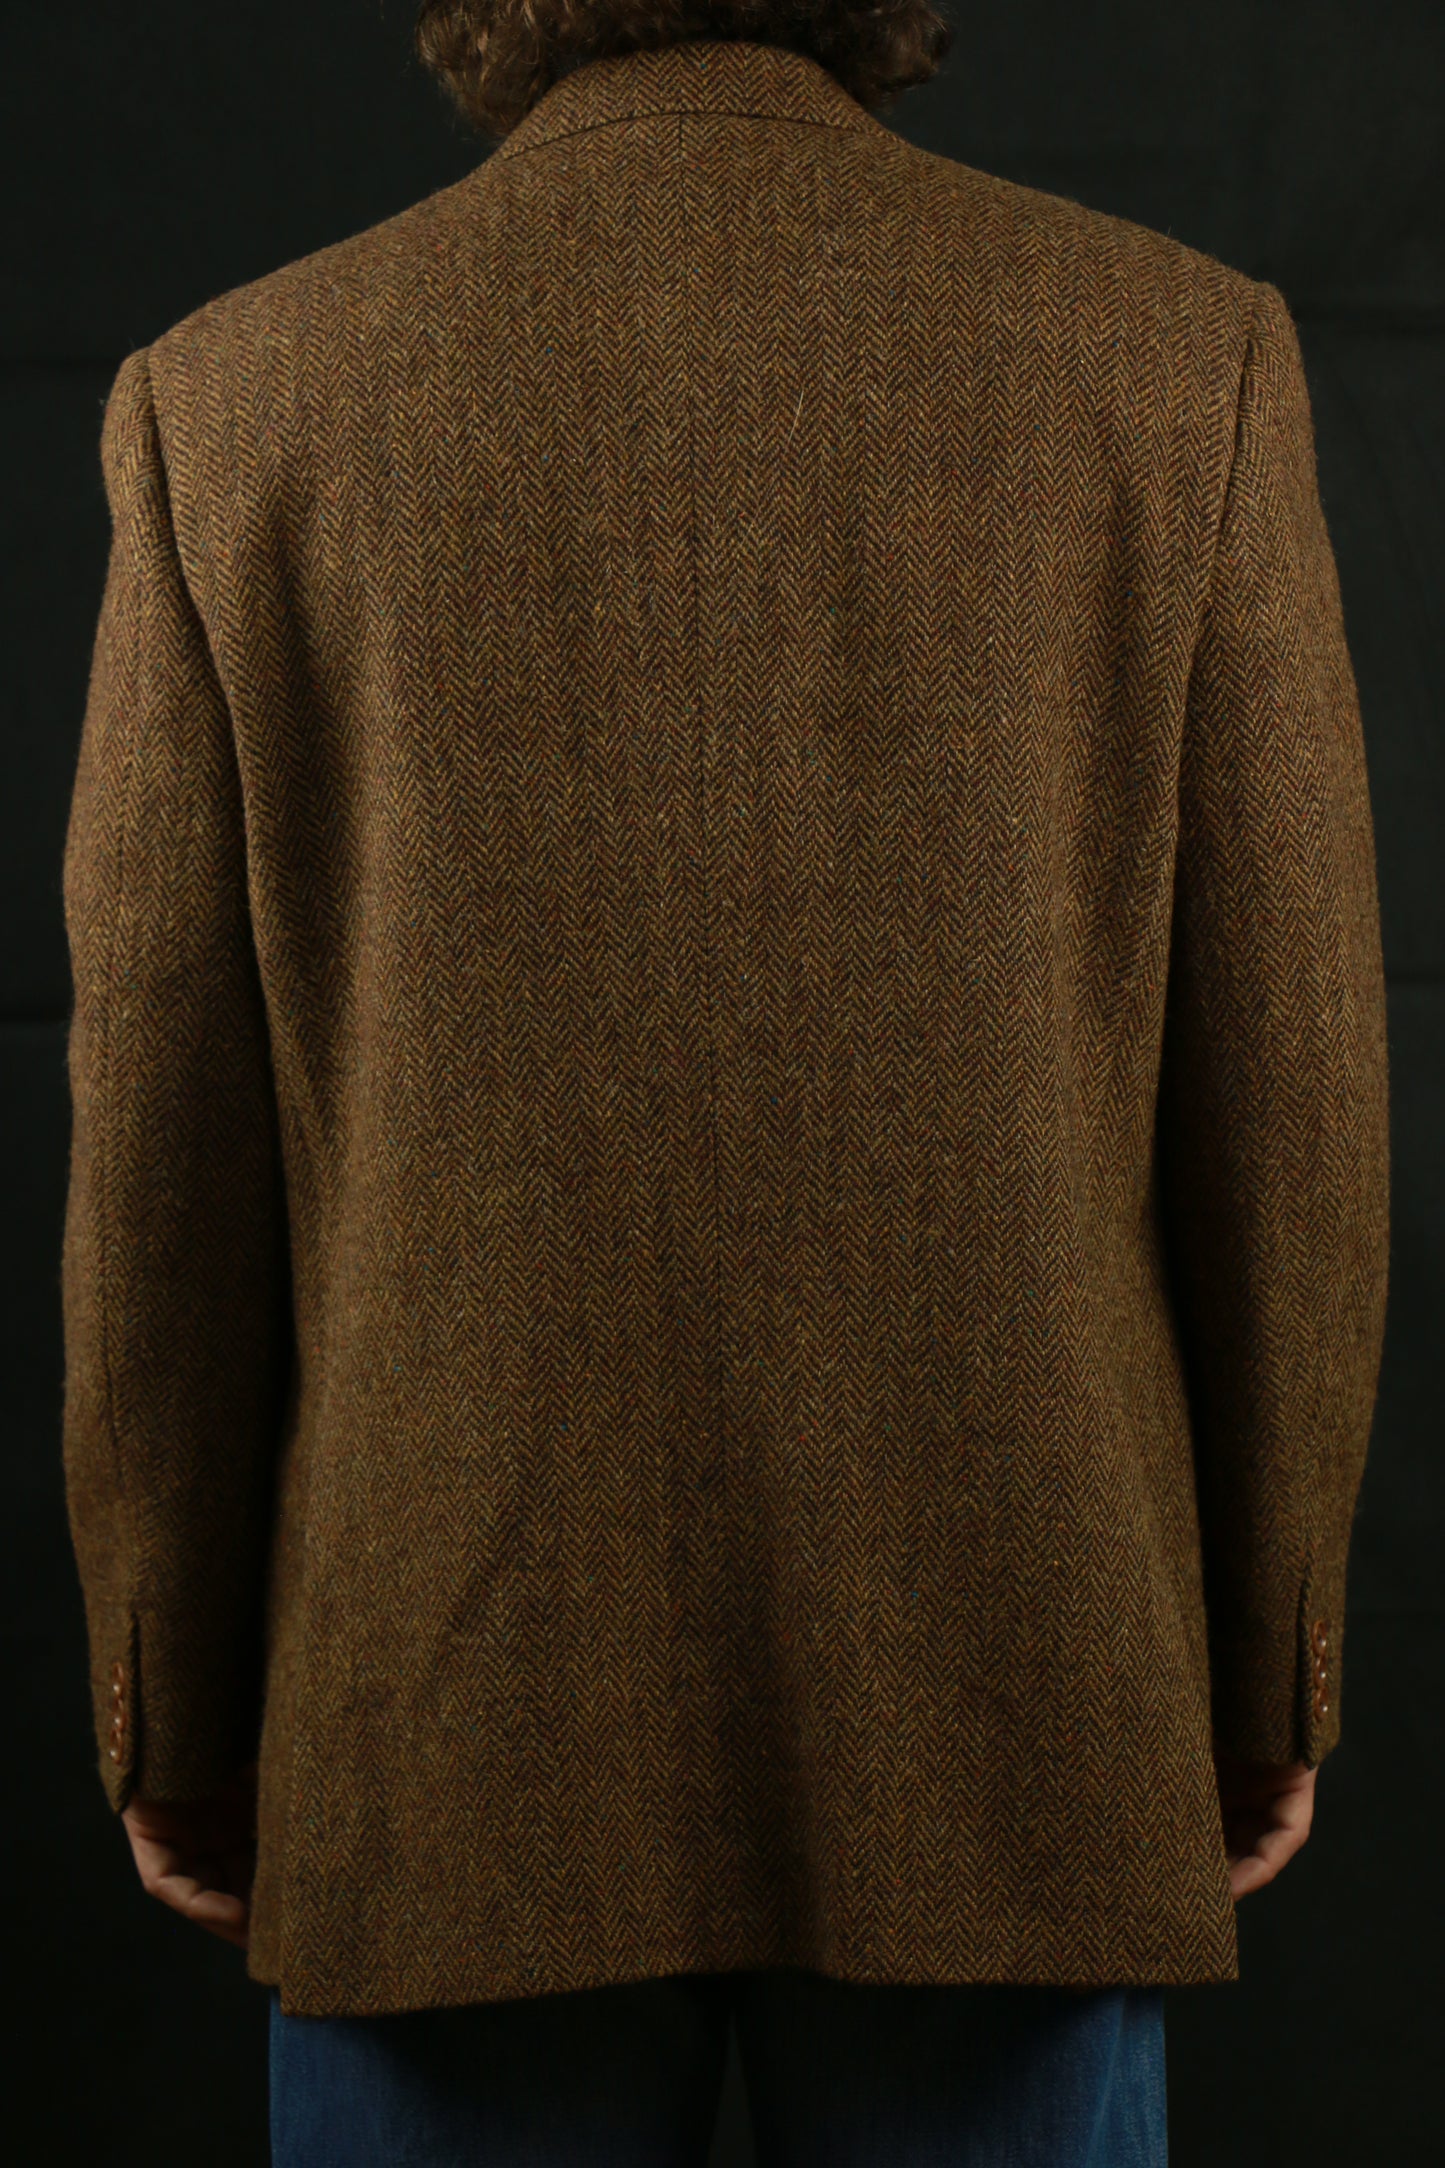 Aquascutum Harris Tweed Jacket - vintage clothing clochard92.com